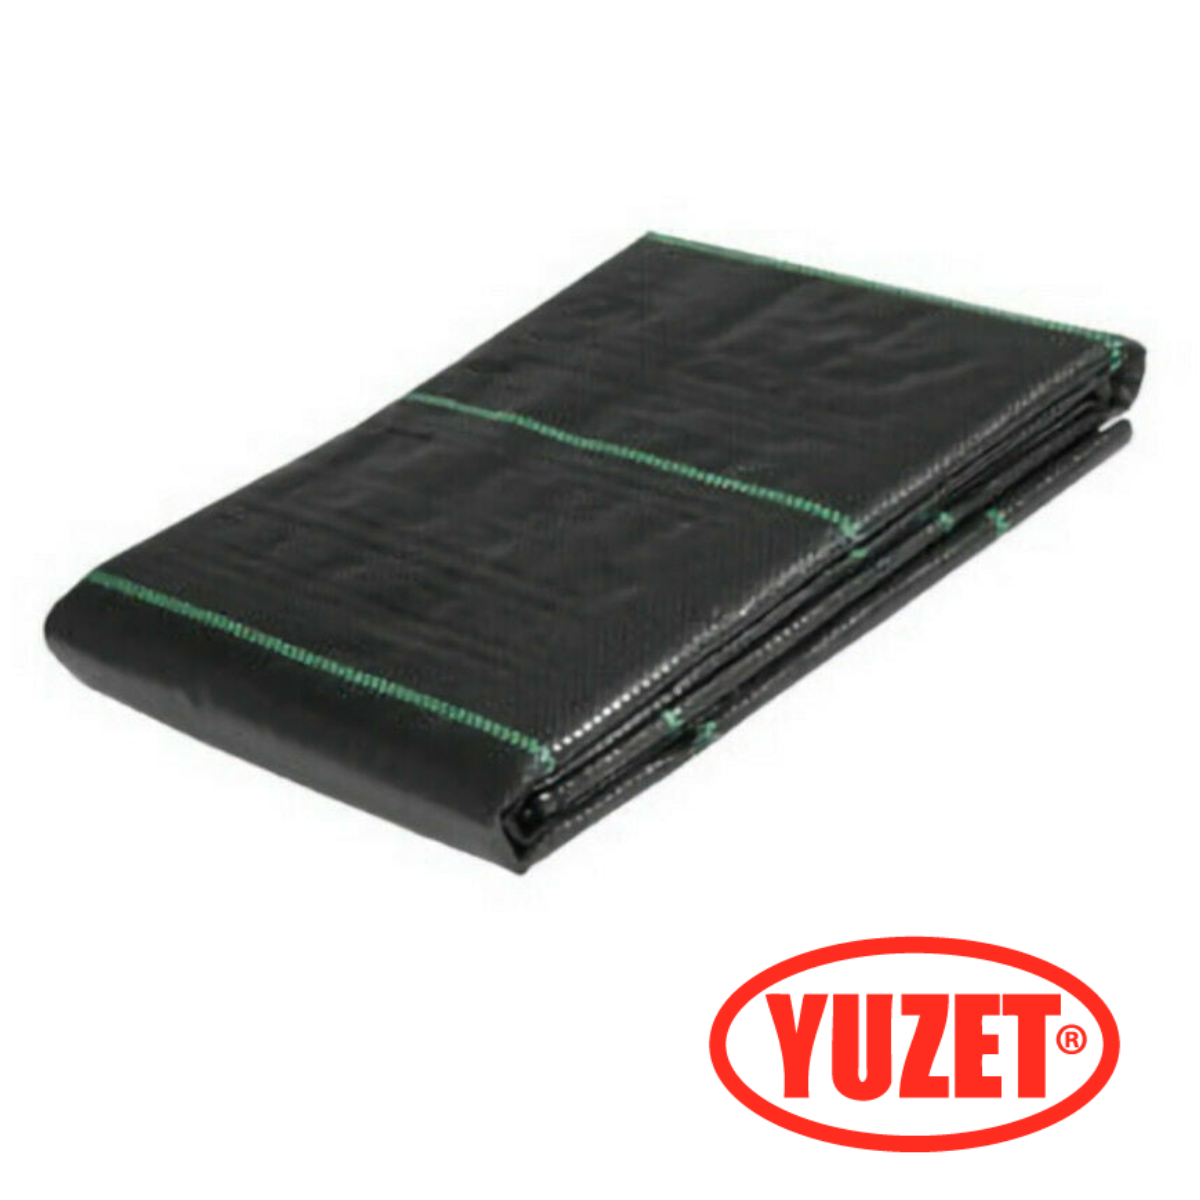 Yuzet Heavy Duty Weed Control Fabric